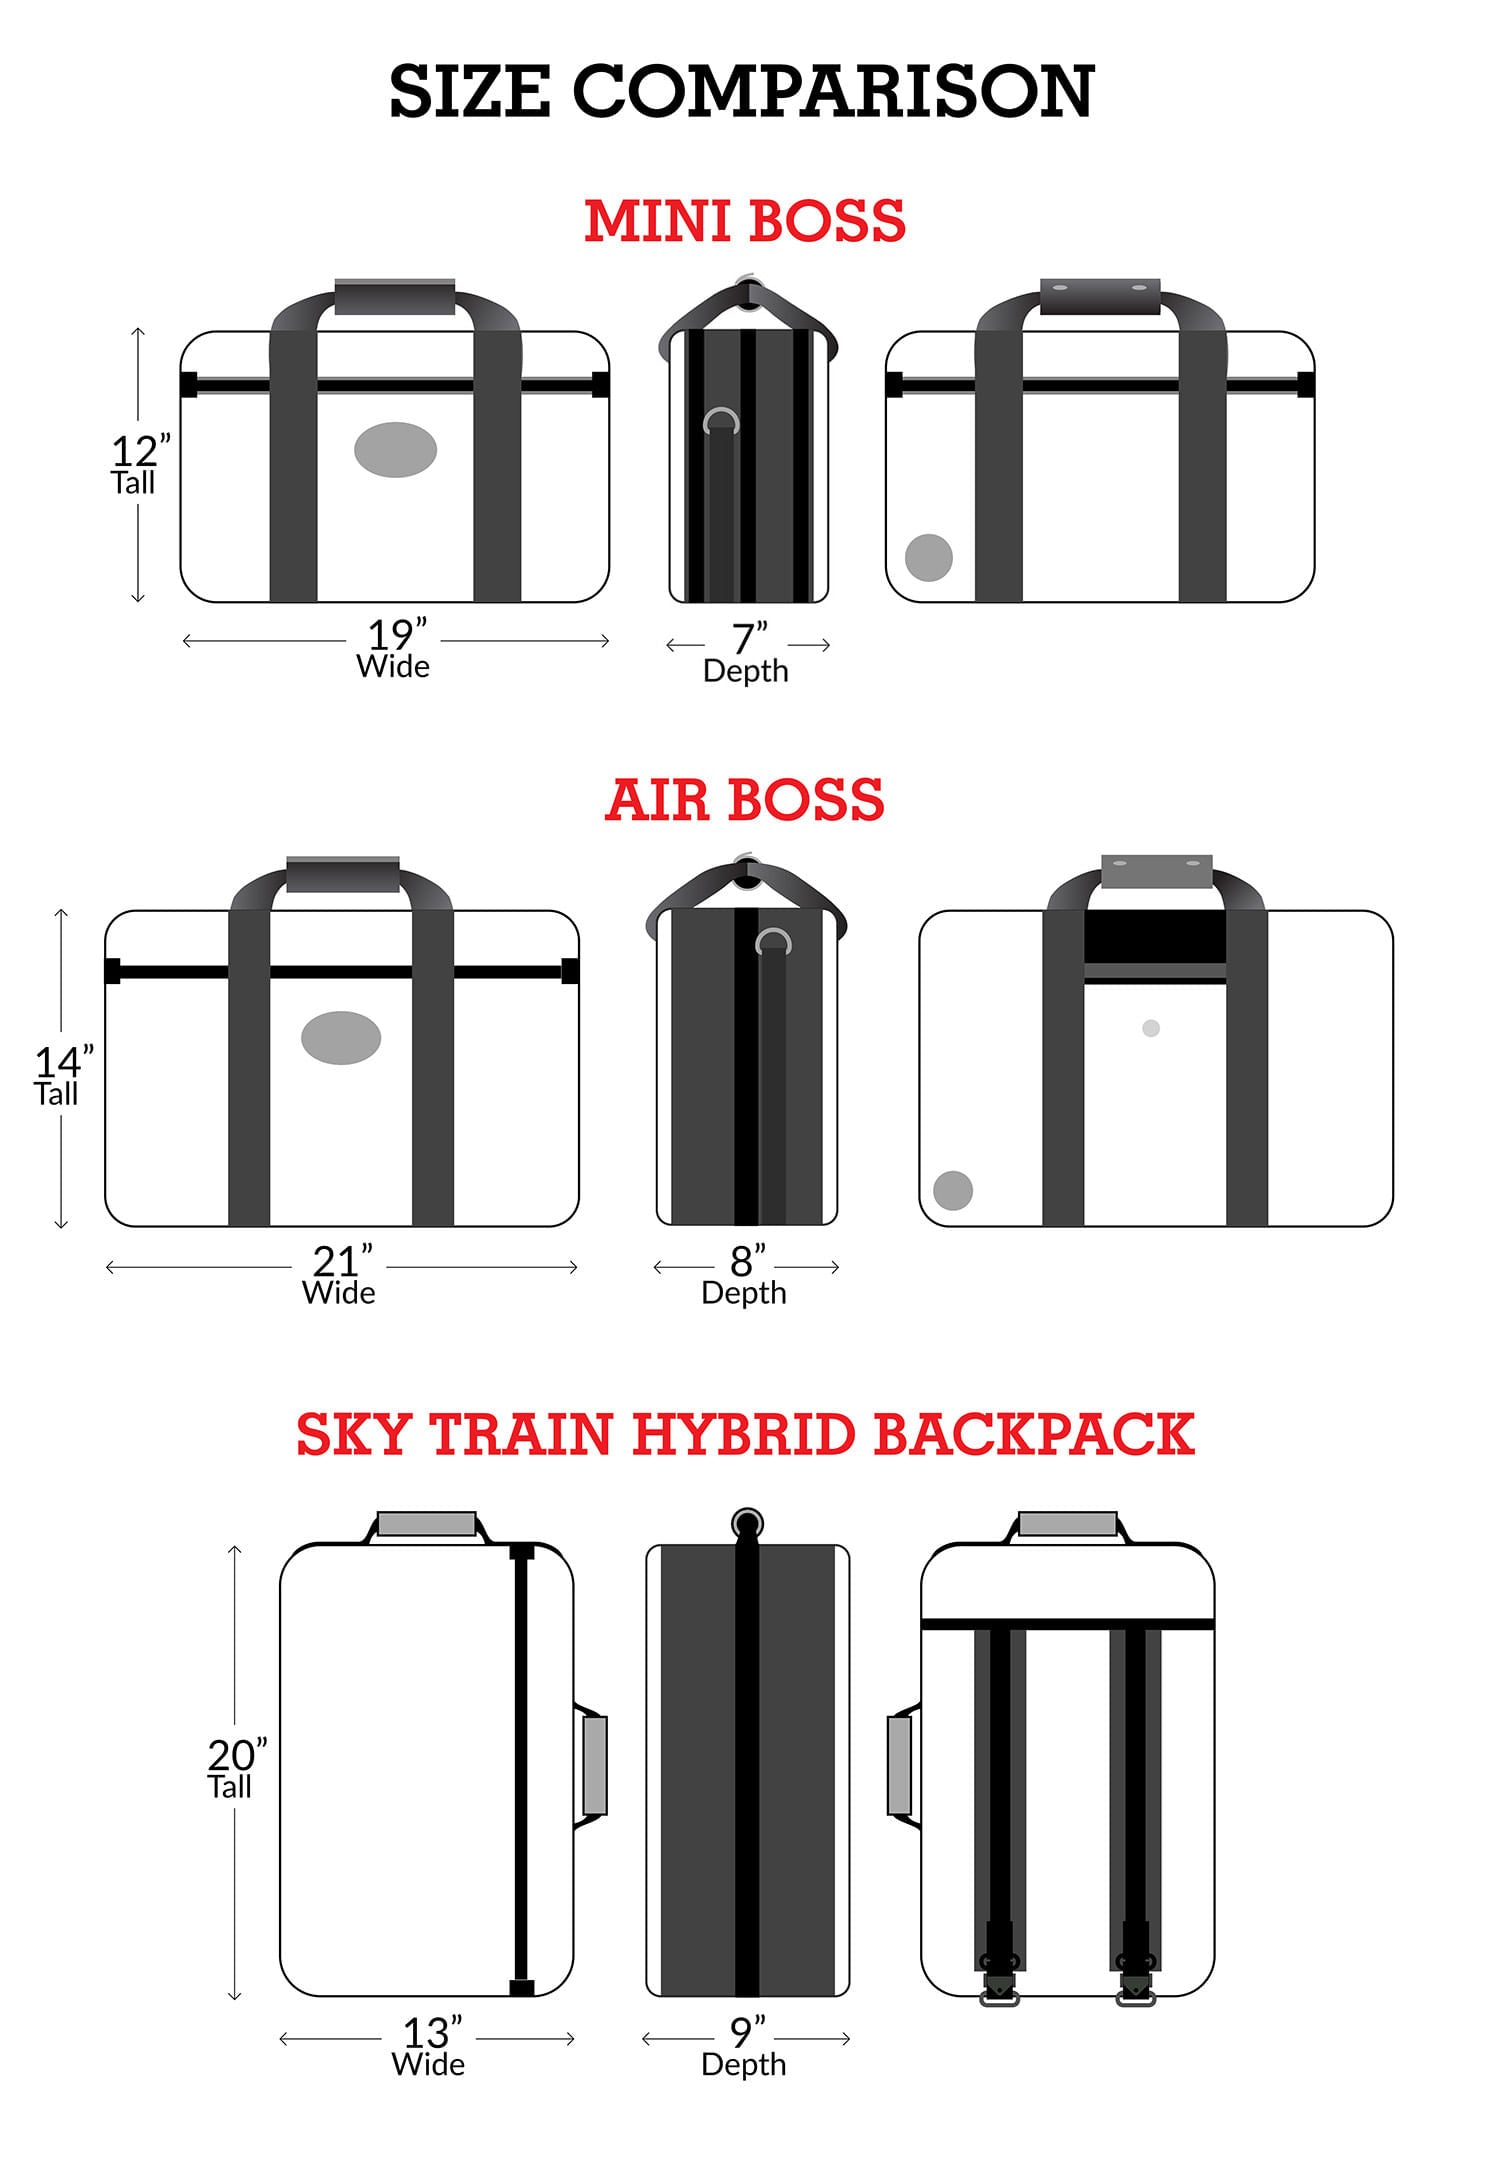 Mini Boss vs Air Boss Vs Sky Train comparison chart. 